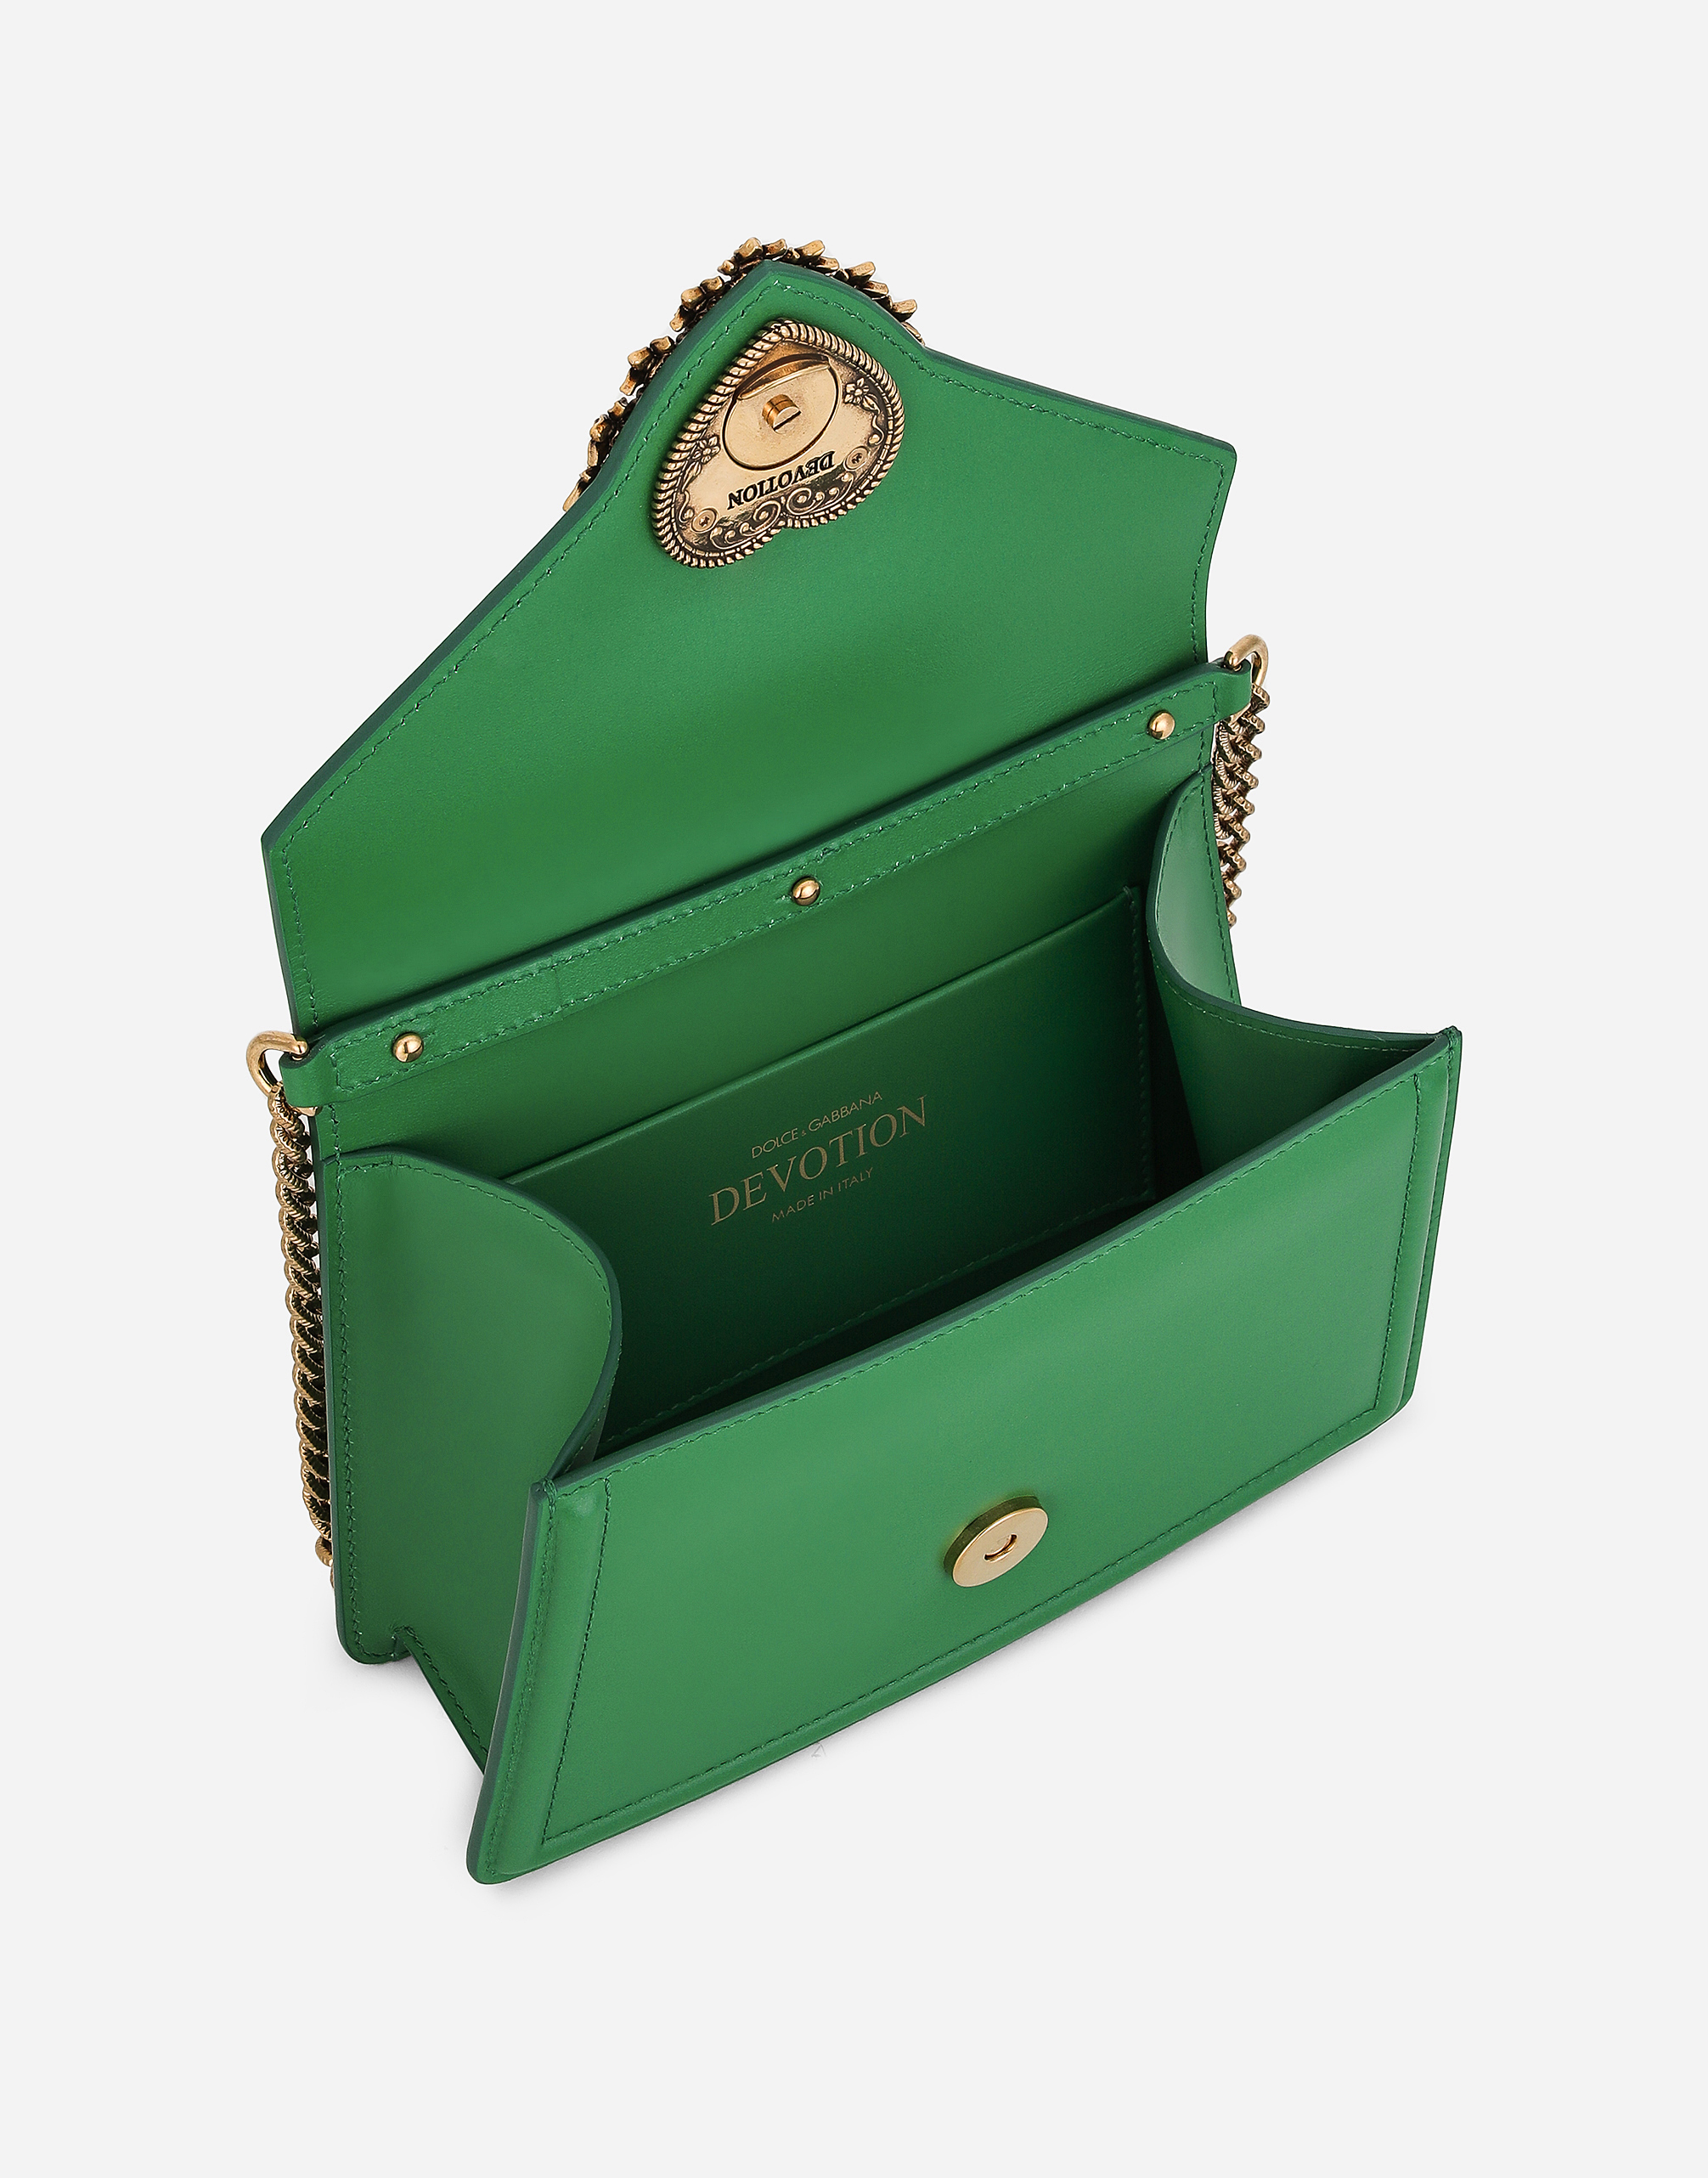 Handbags Dolce & Gabbana, Style code: bm2274-an233-80718